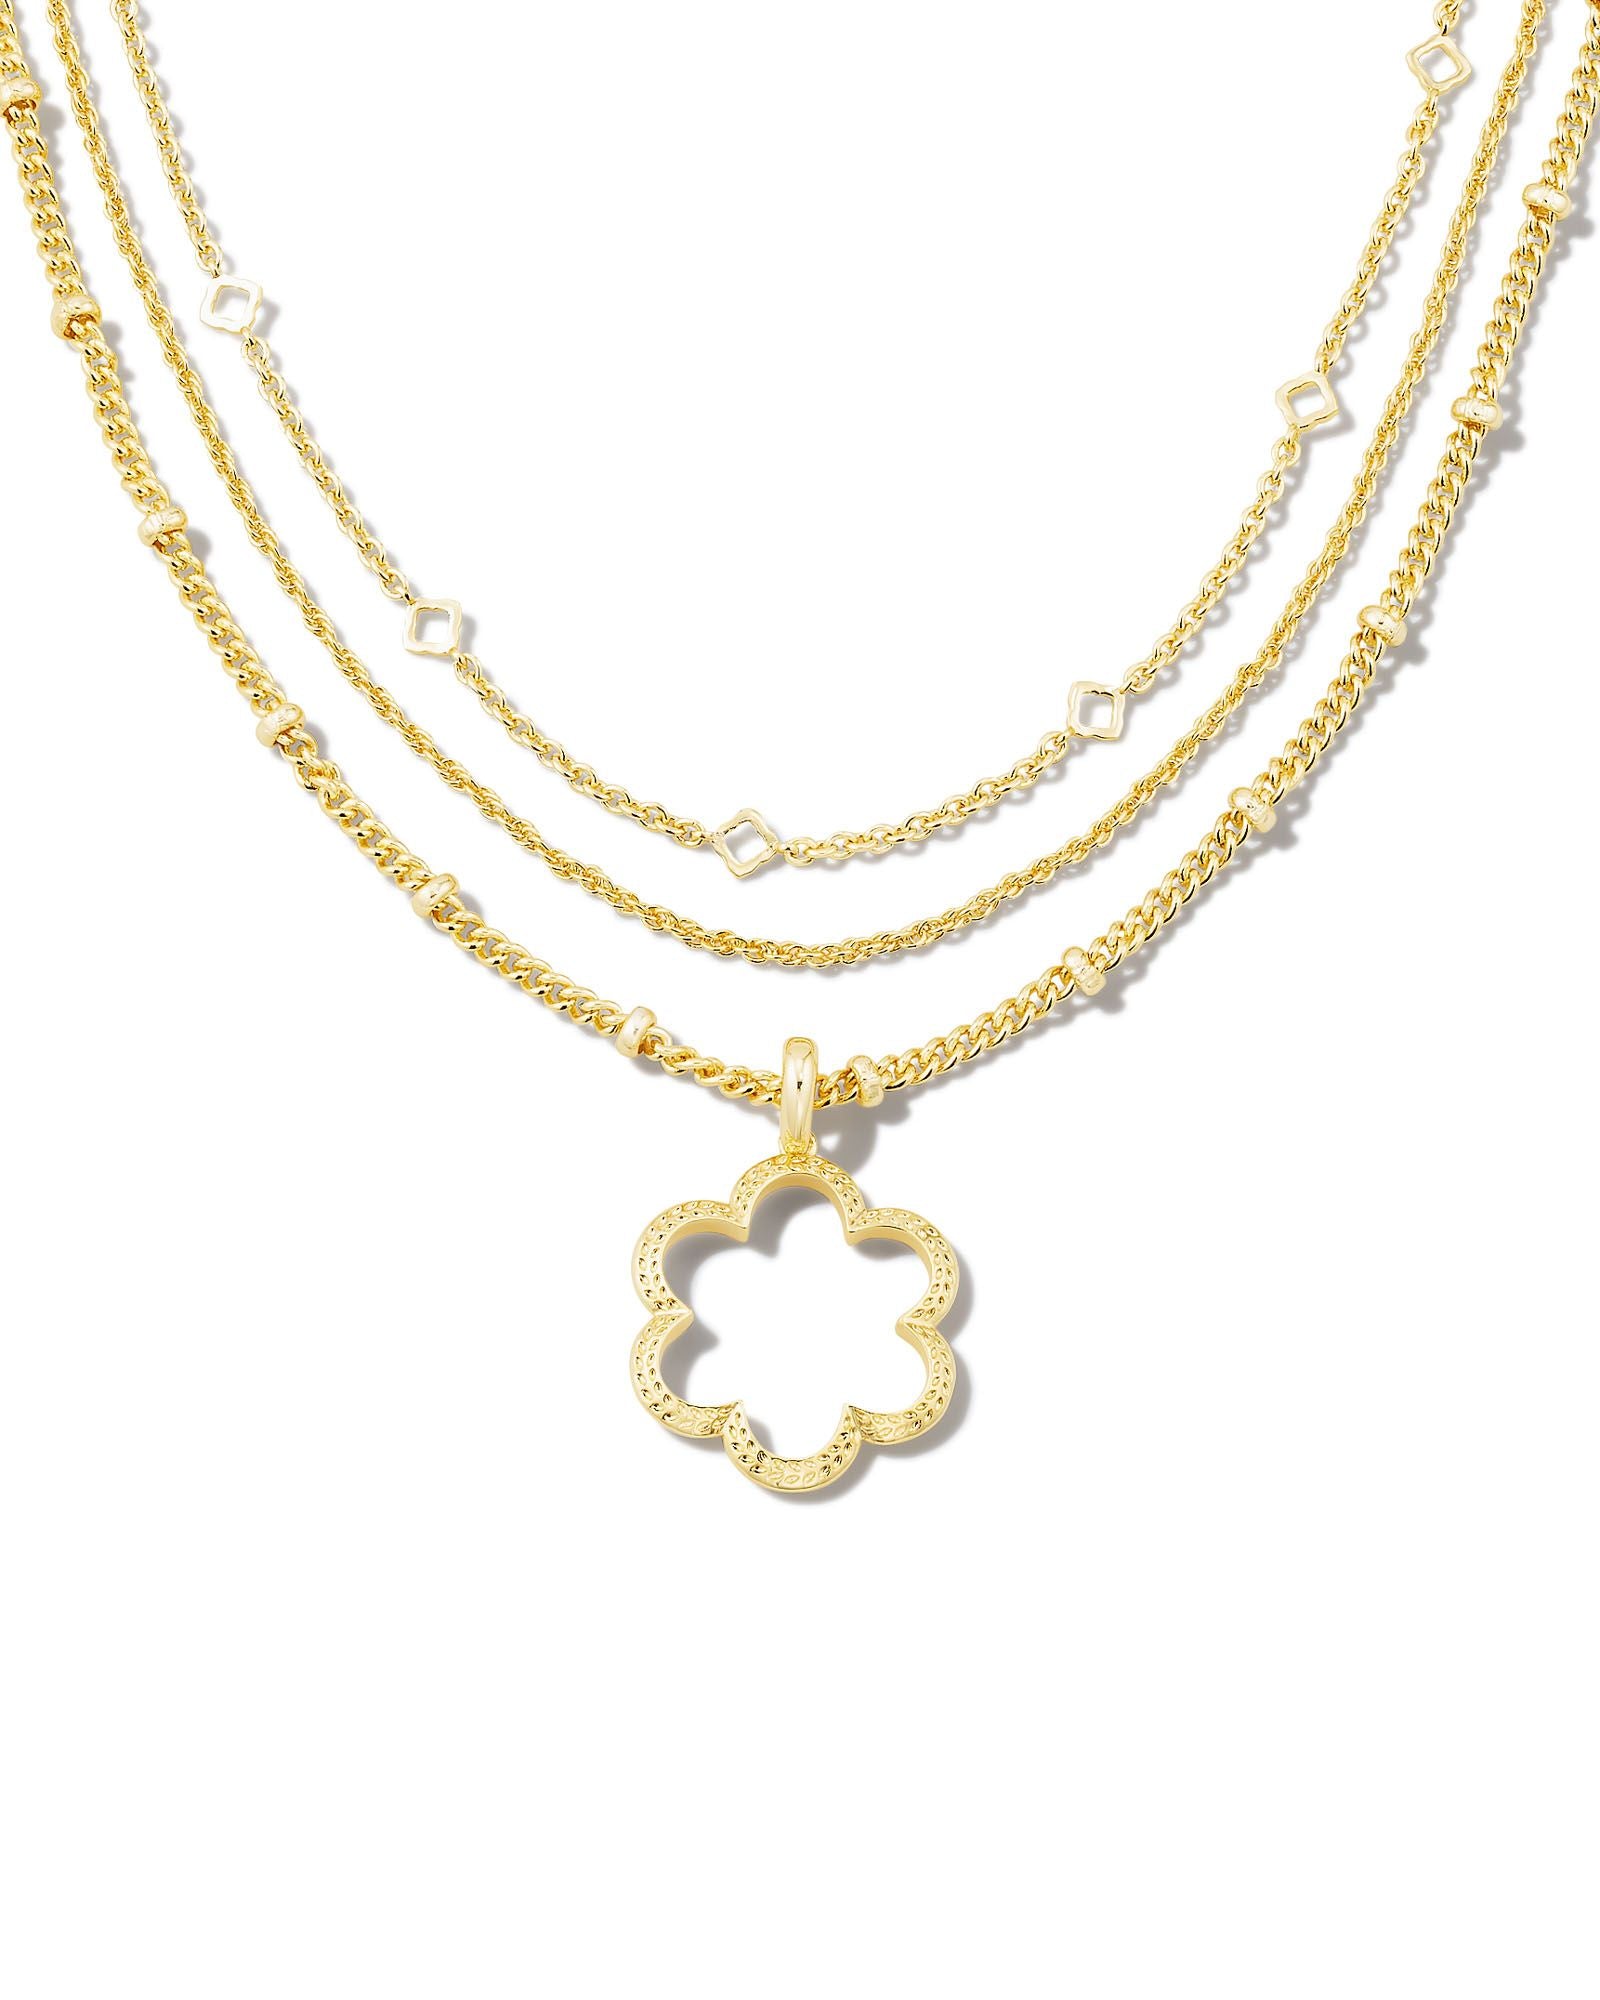 Susie Multi Strand Necklace in Gold